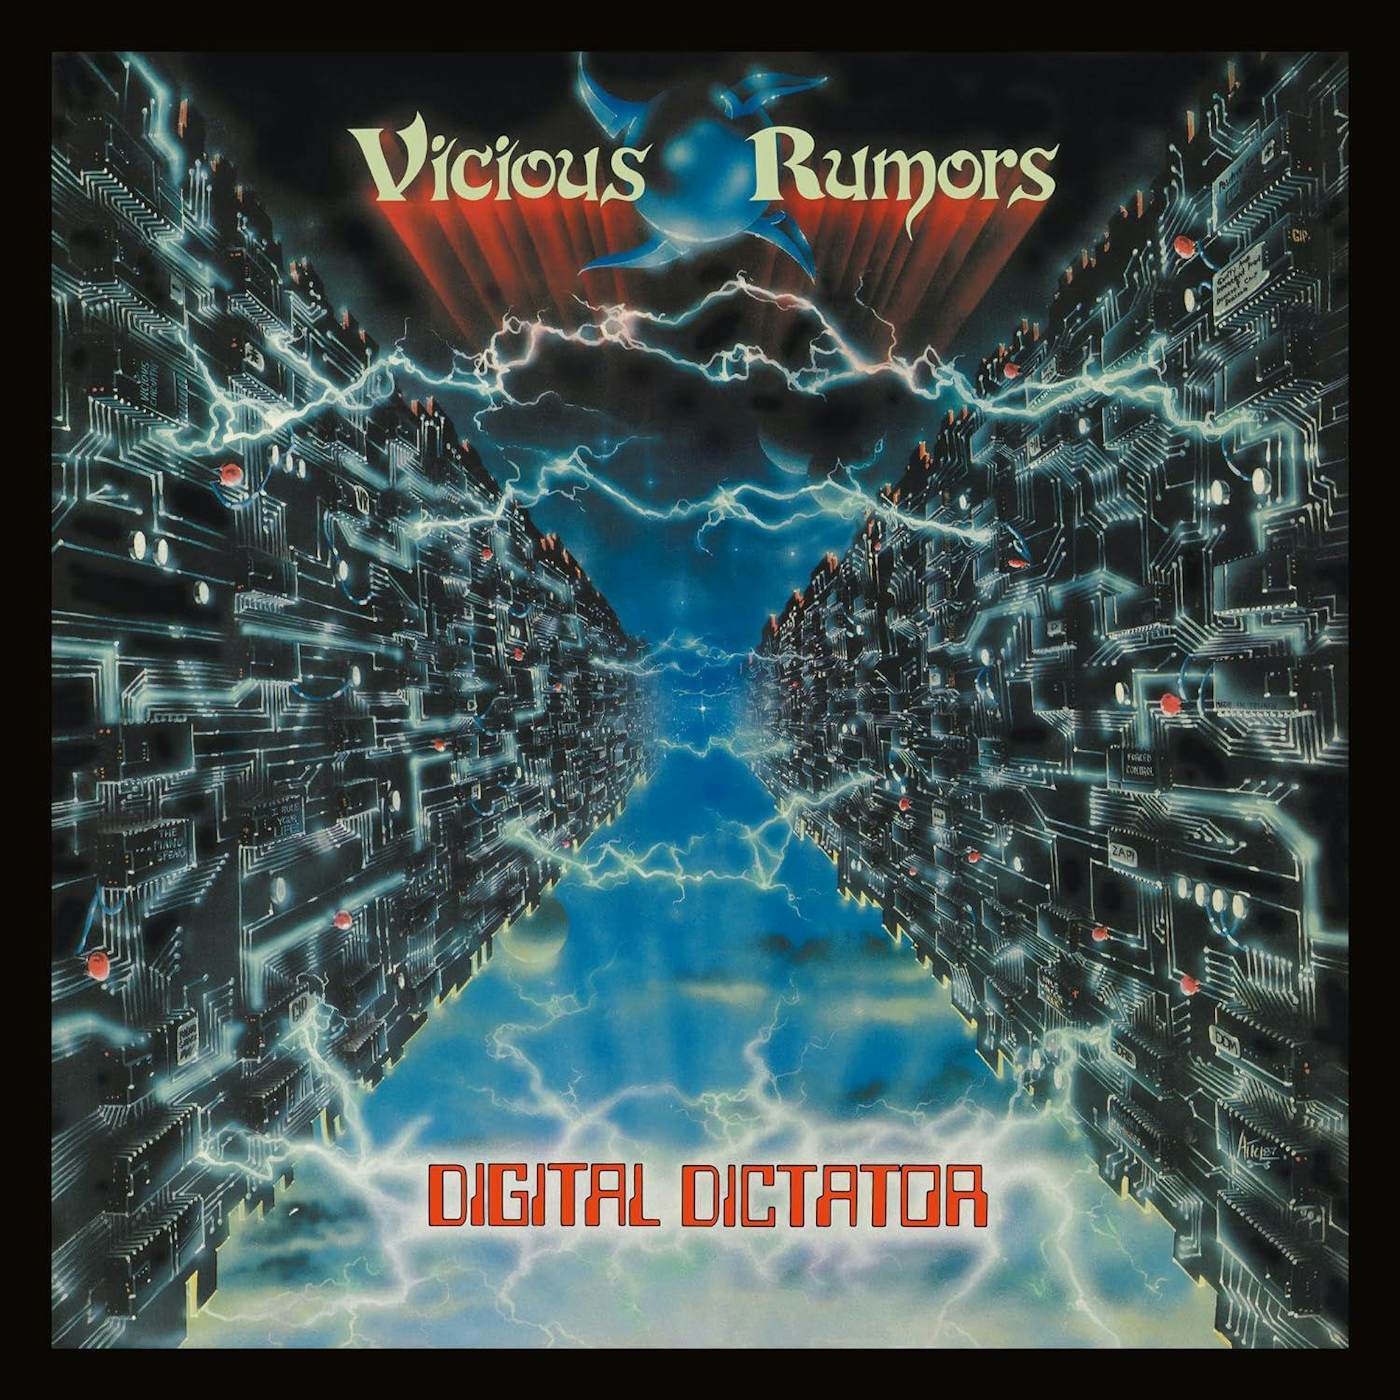 Vicious Rumors Digital Dictator Vinyl Record